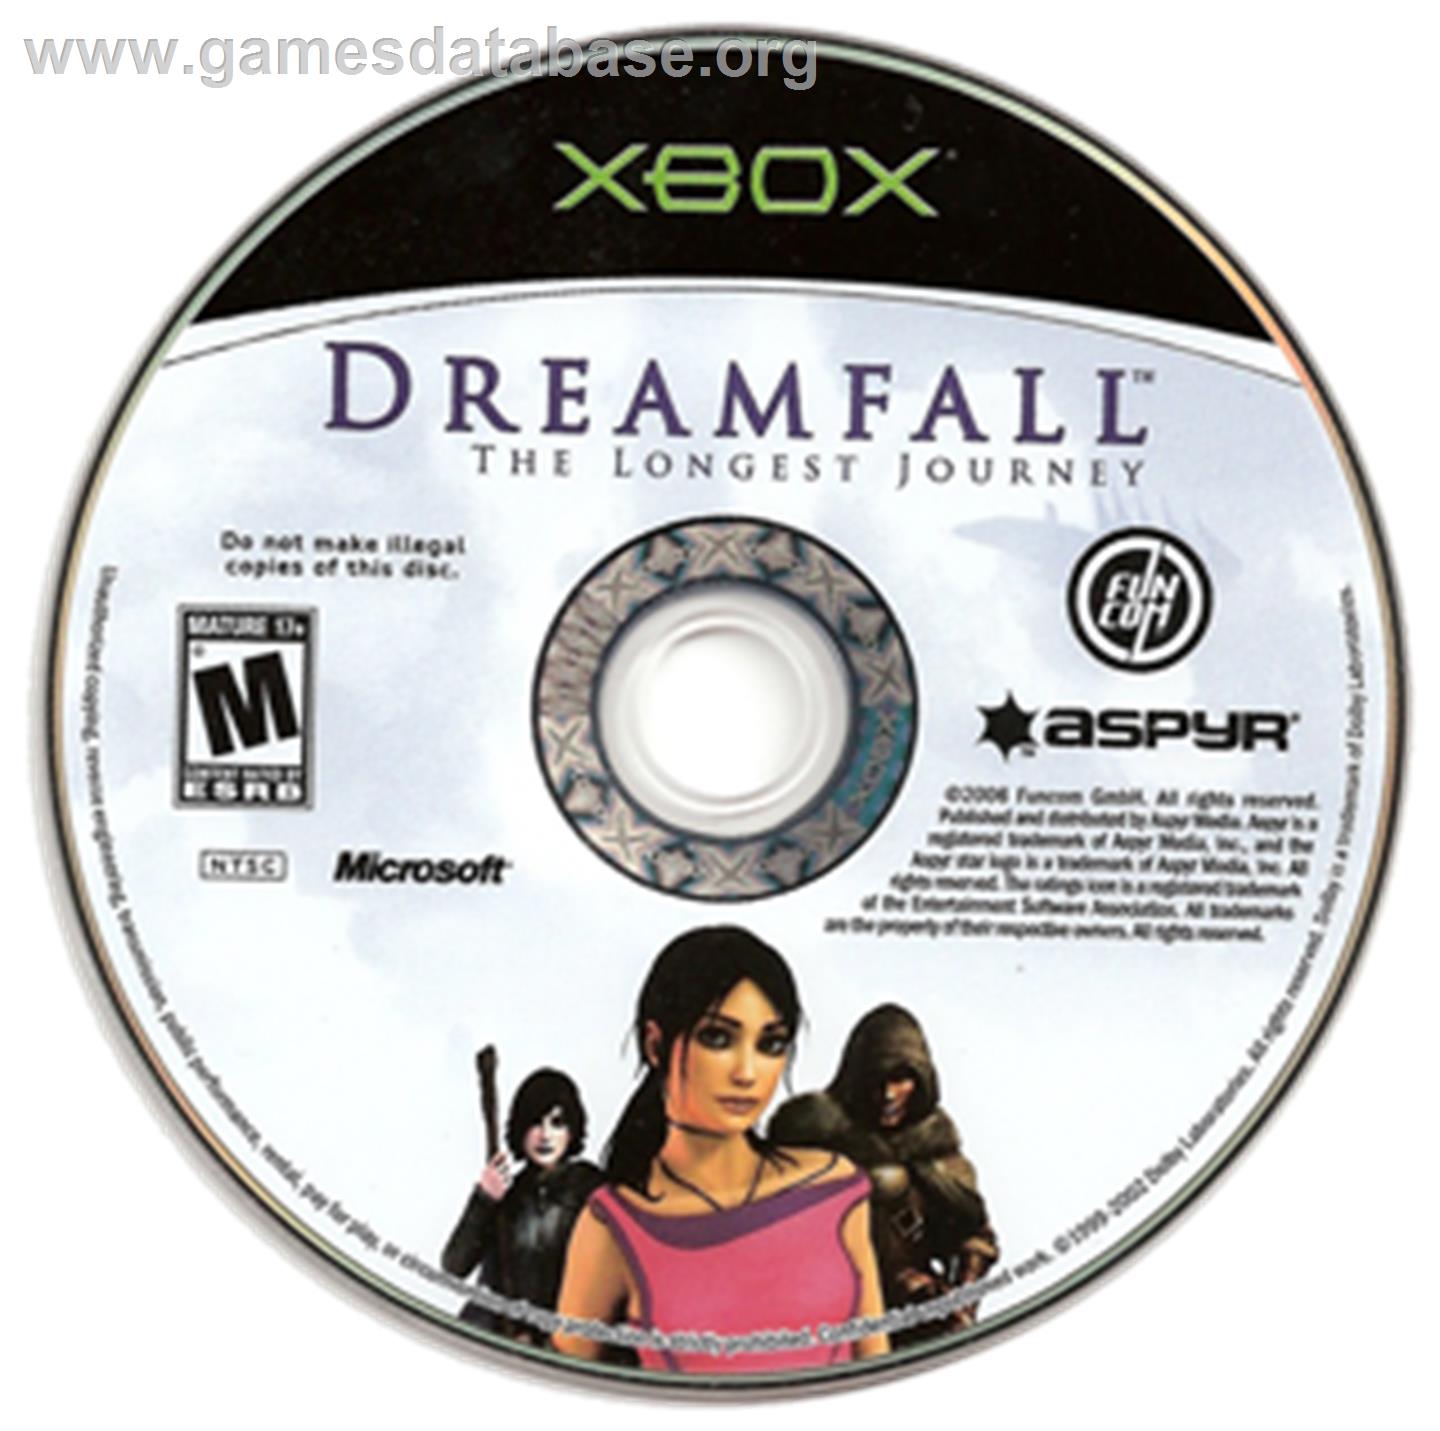 Dreamfall: The Longest Journey - Microsoft Xbox - Artwork - CD